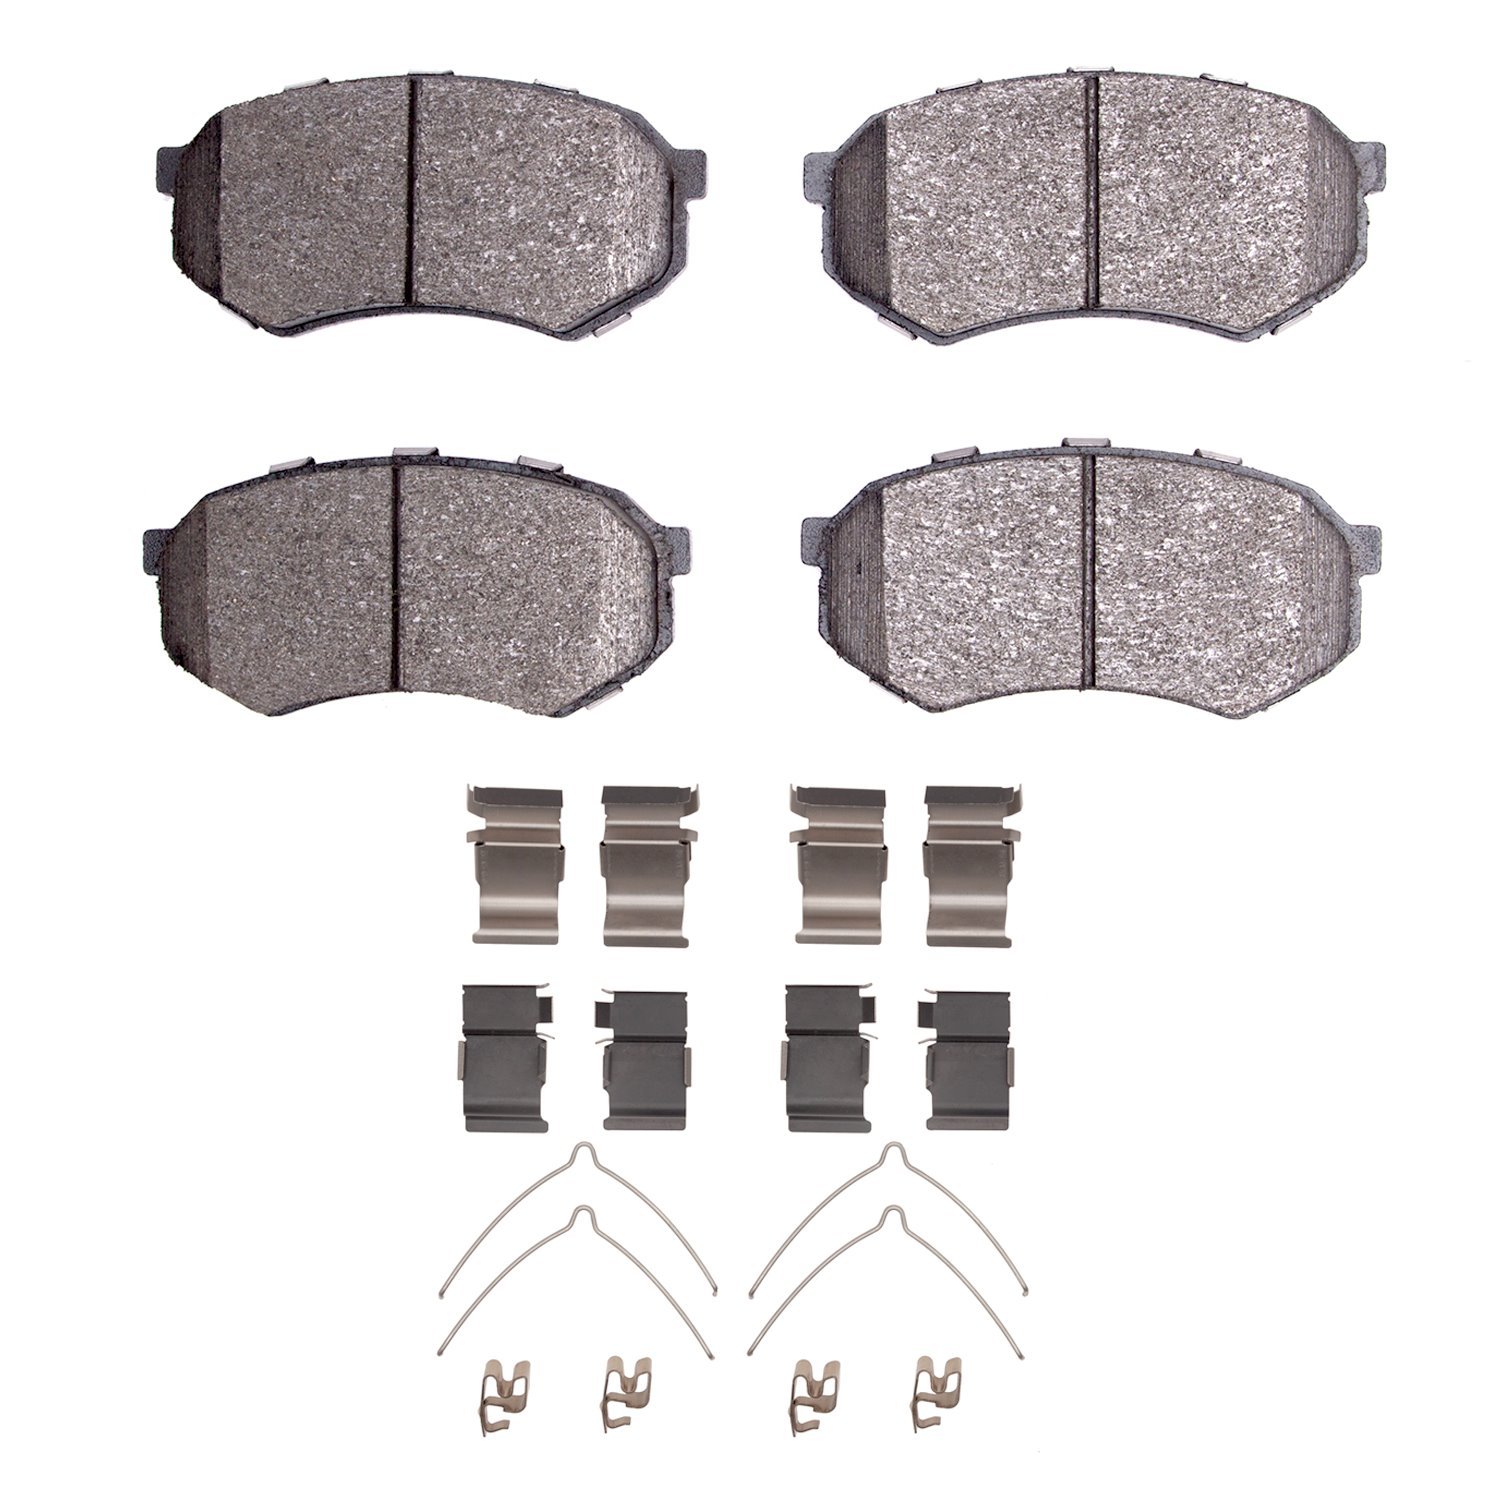 1310-0389-01 3000-Series Ceramic Brake Pads & Hardware Kit, 1983-1995 Multiple Makes/Models, Position: Front